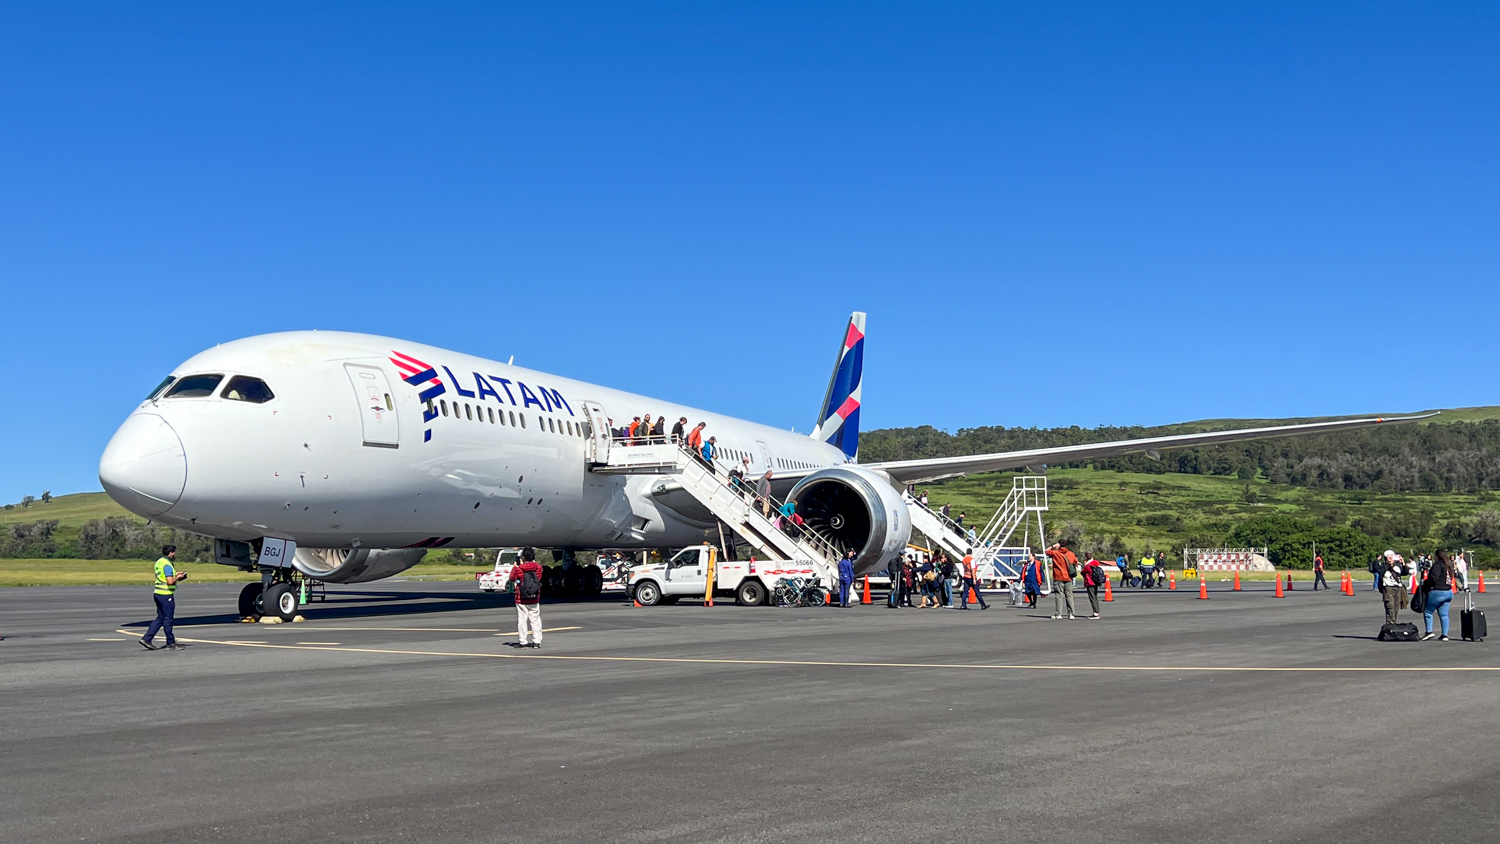 Our LATAM 787 Dreamliner on the tarmac at Mataveri International Airport on Rapa Nui (Easter Island).